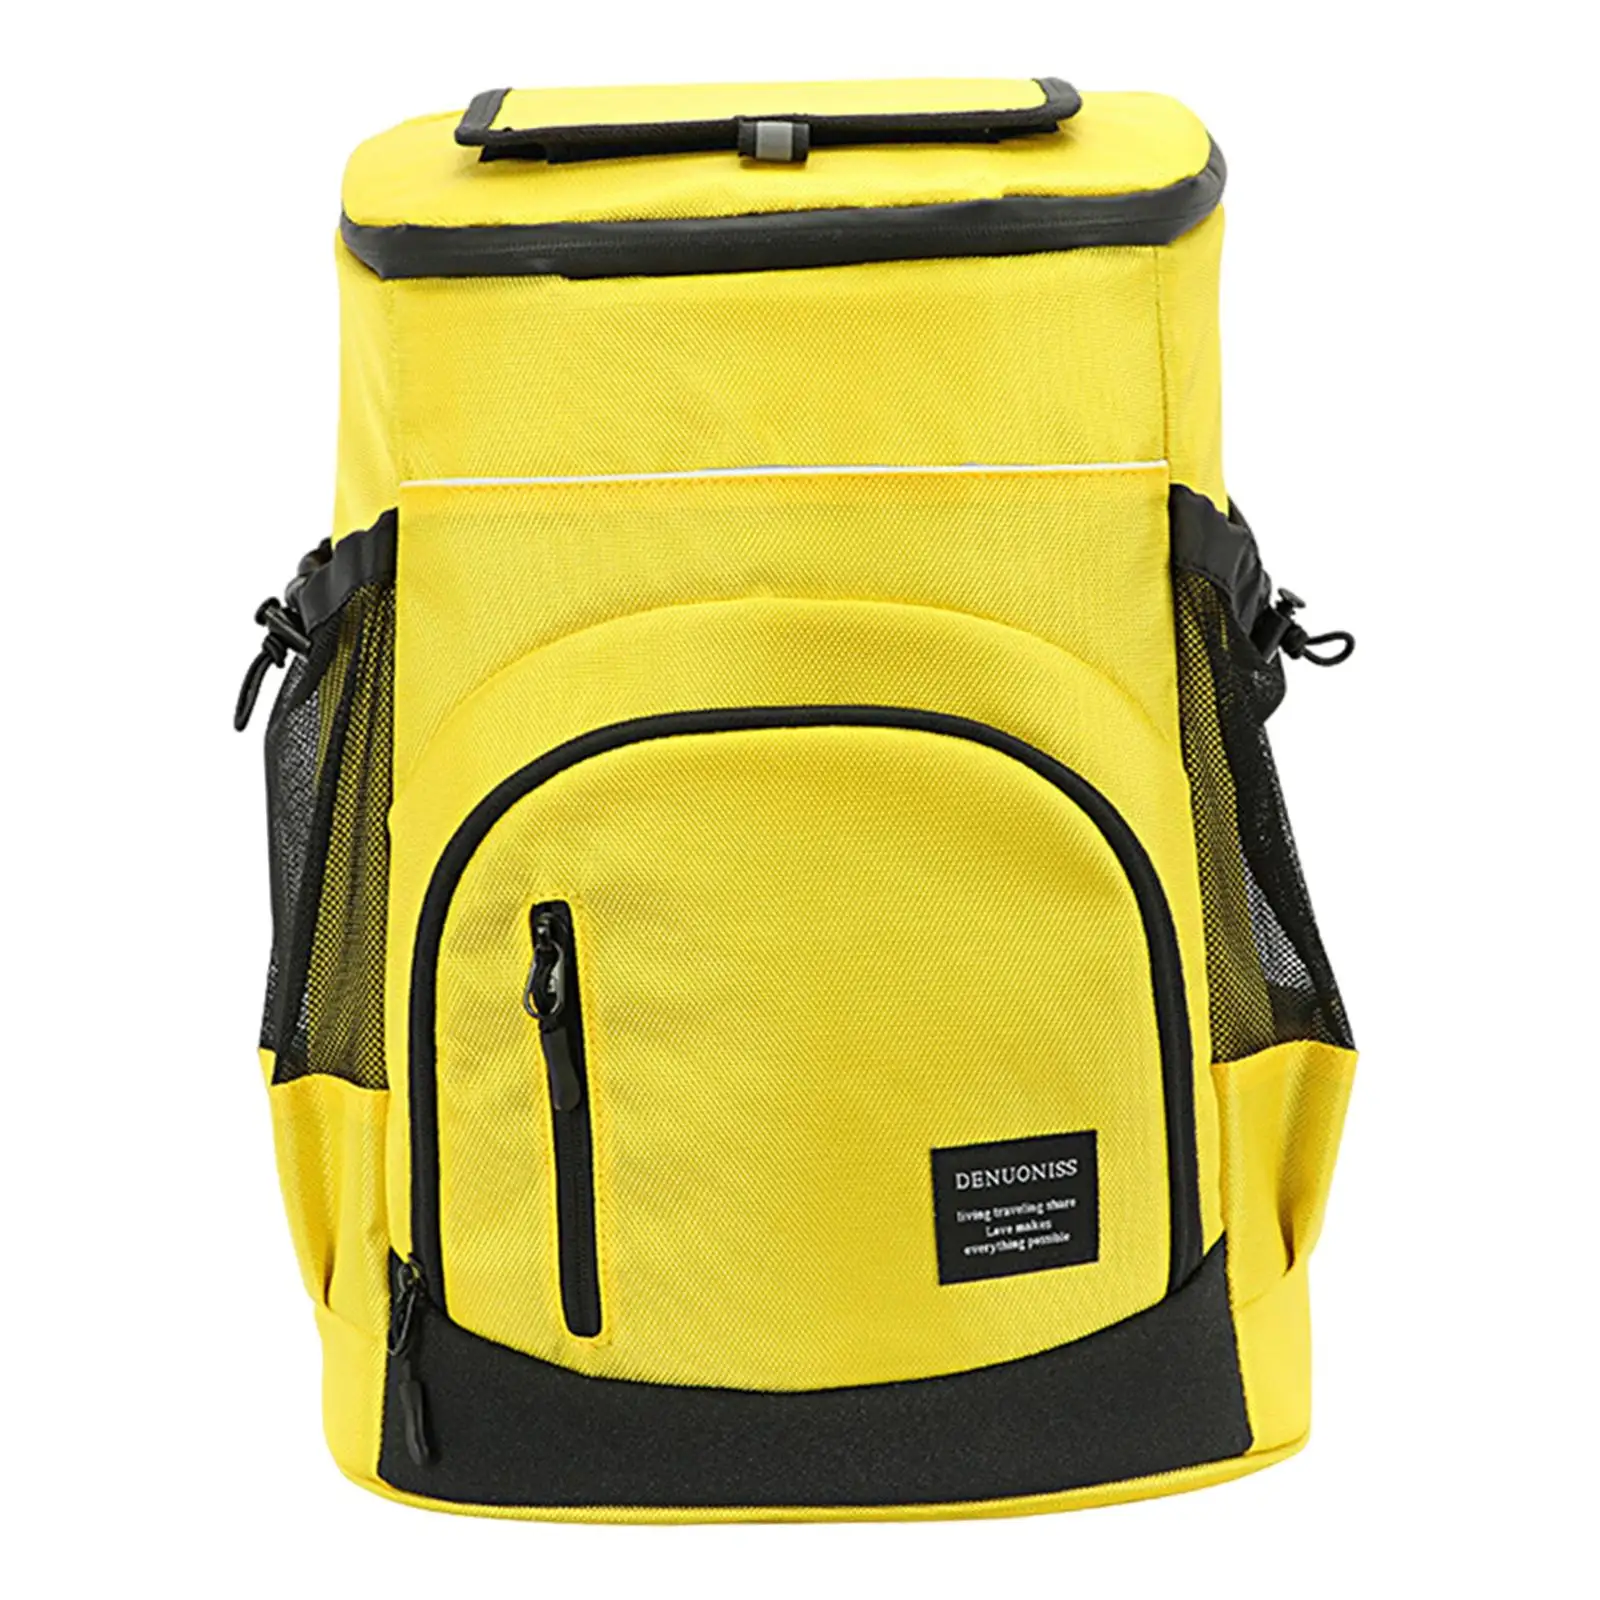 Insulated cooler  Lightweight  Cooler Bag  Backpack for Men Women Picnic Beach Camping Hiking